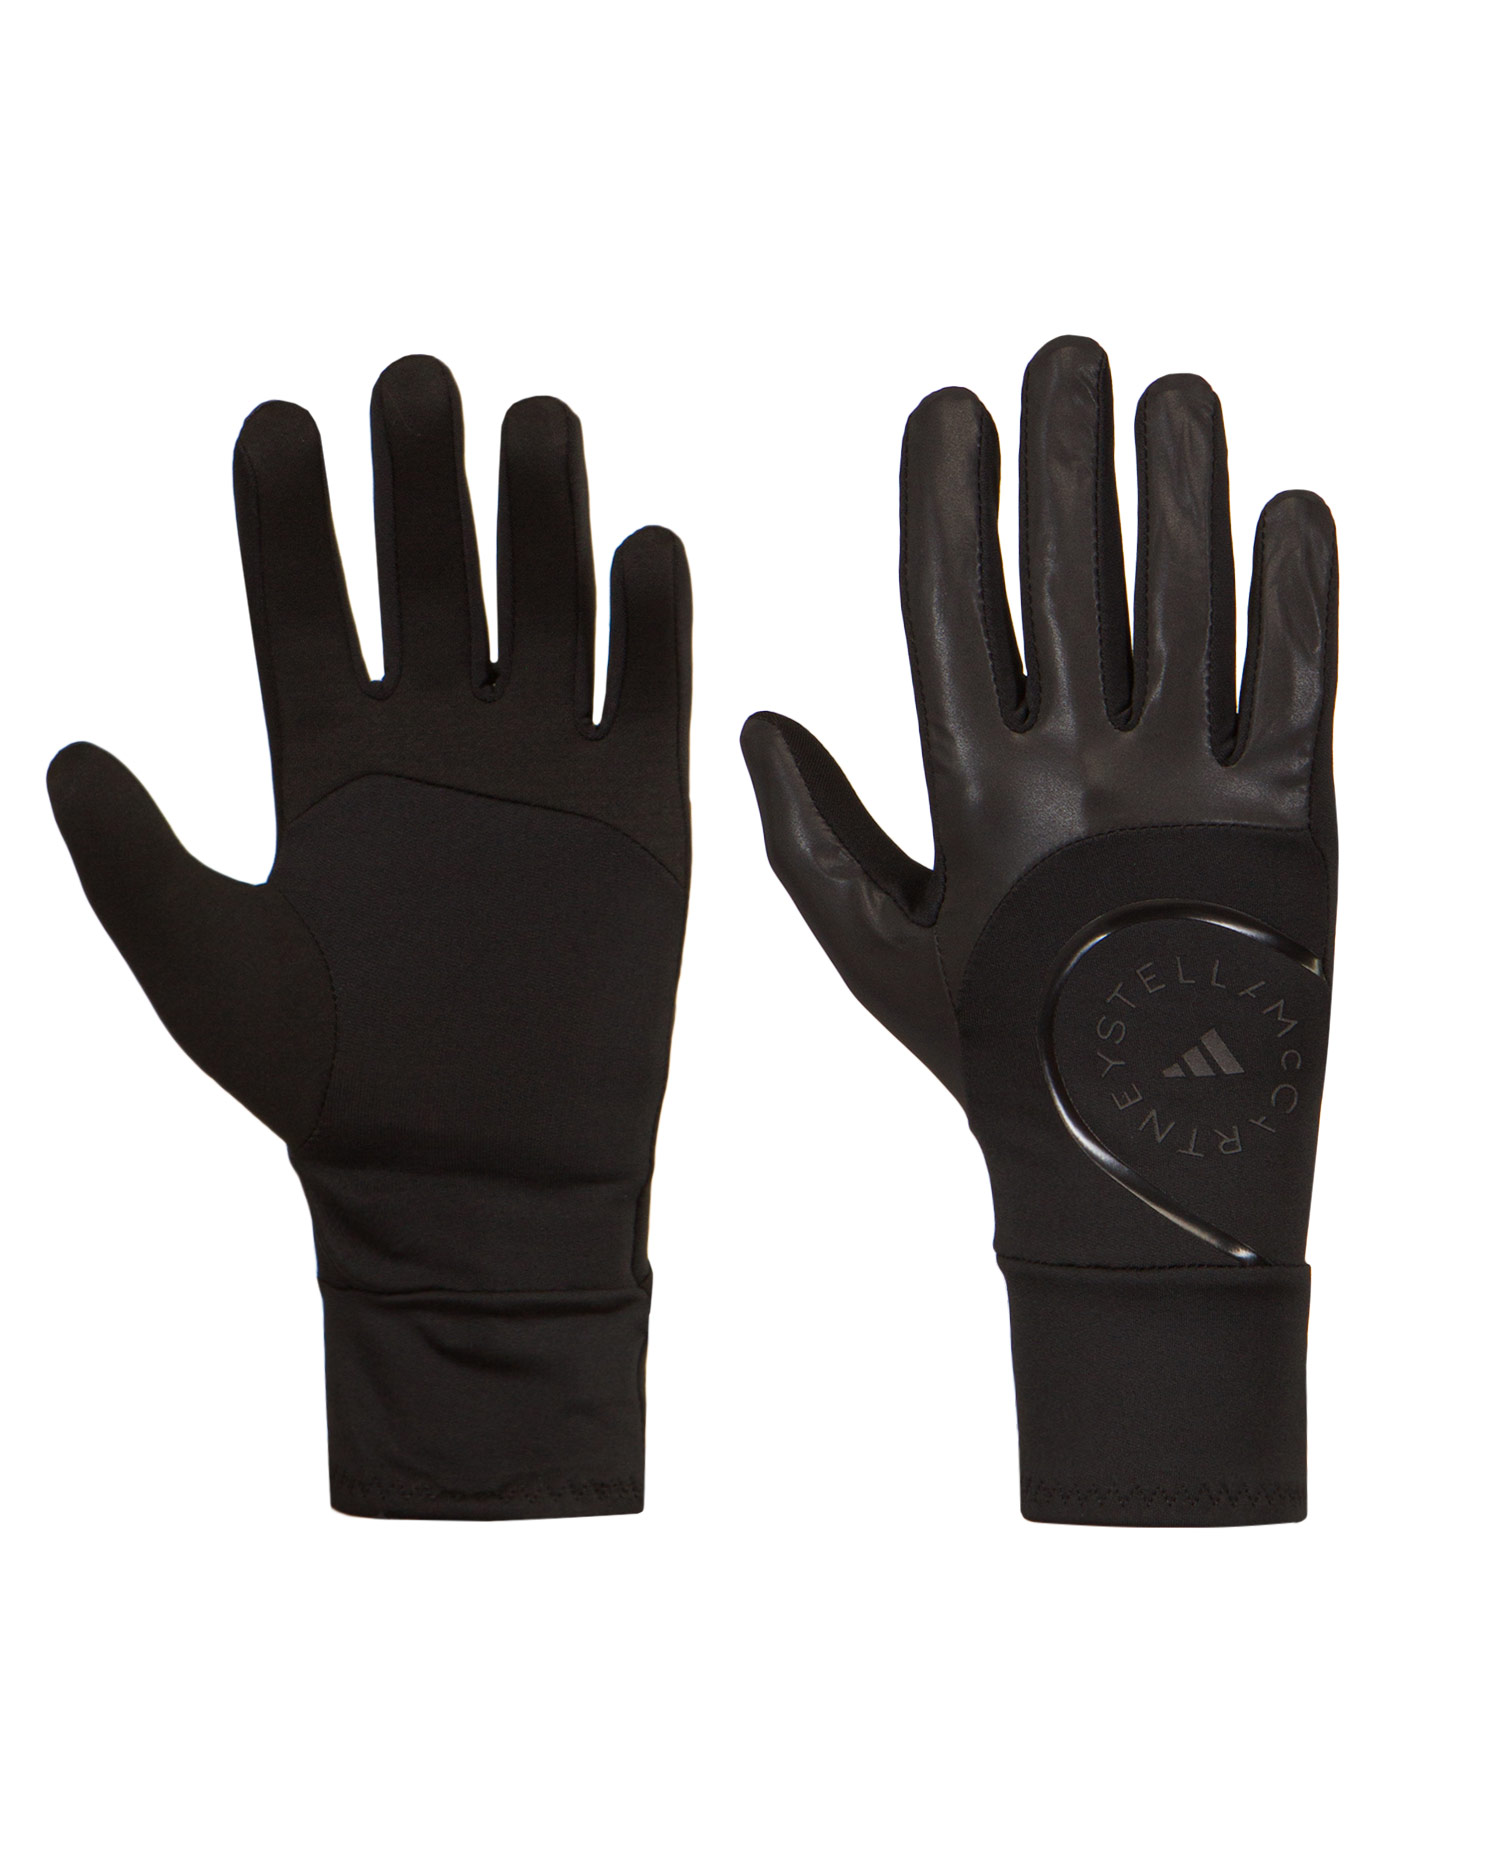 ADIDAS BY STELLA McCARTNEY gloves GS2651-black-black-reflective-soft-powder  | S'portofino